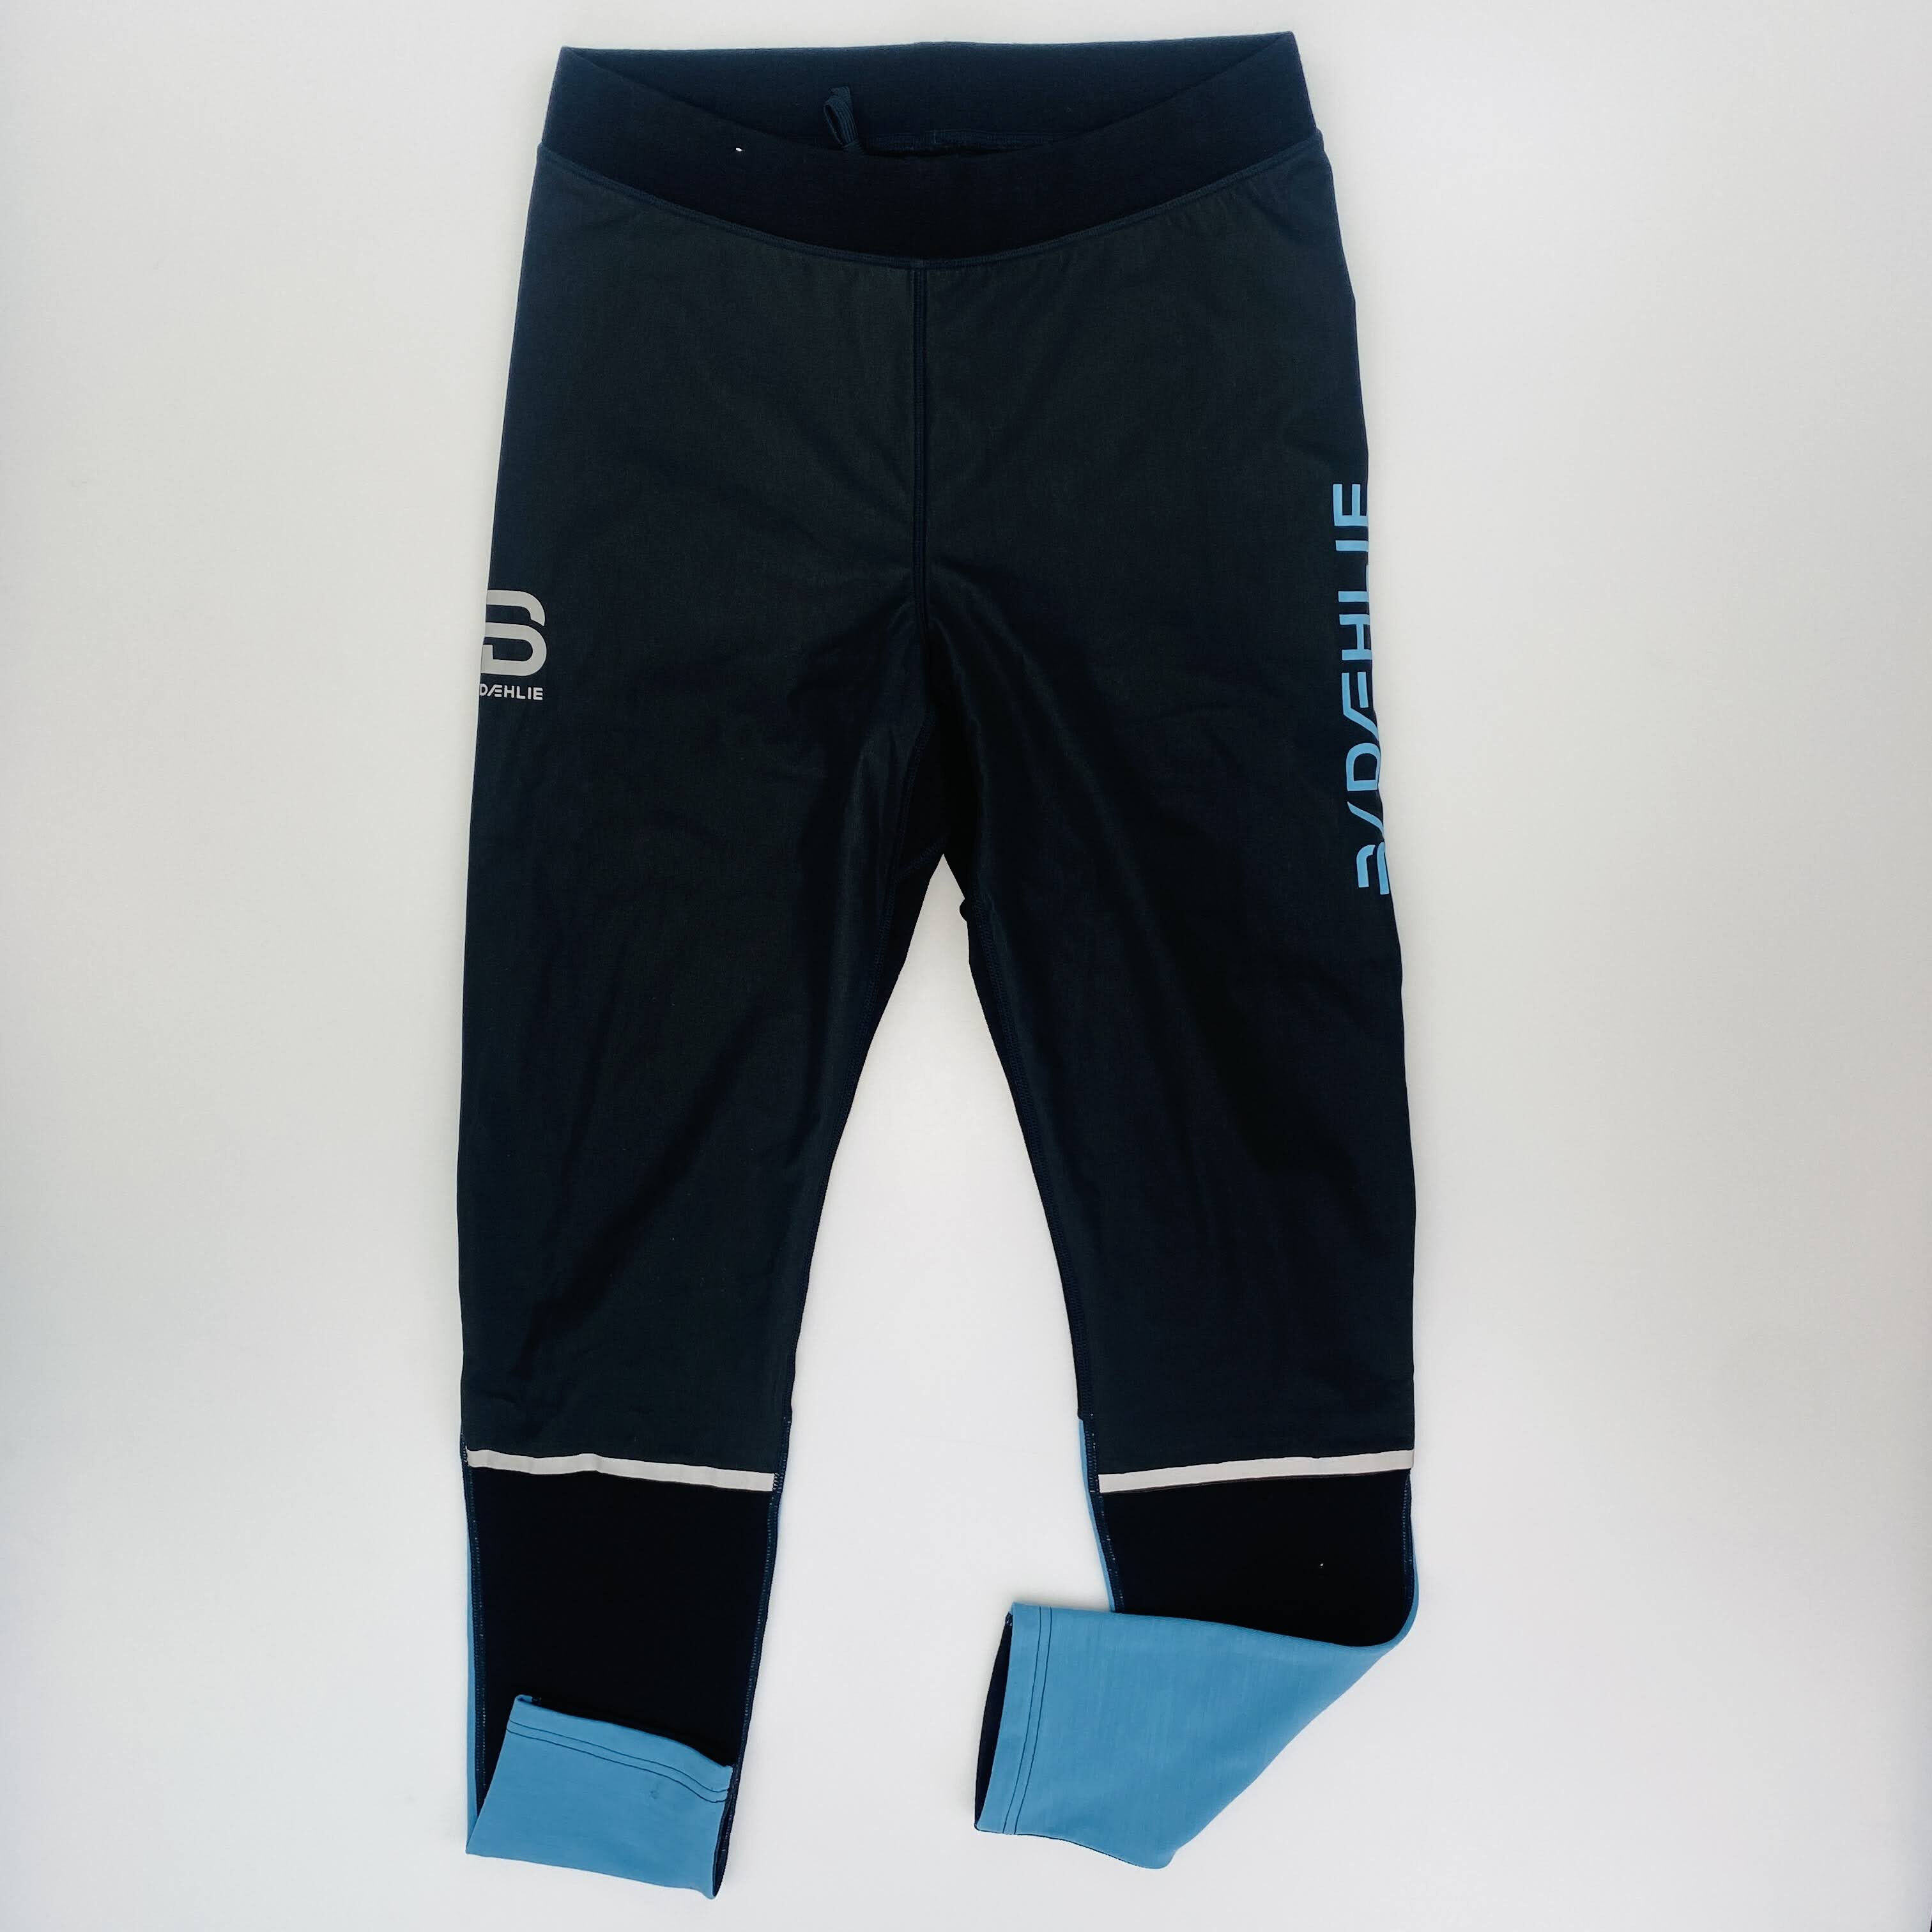 Daehlie Tights Winter Wool 2.0 Men - Pantaloni da sci di seconda mano - Uomo - Nero - M | Hardloop